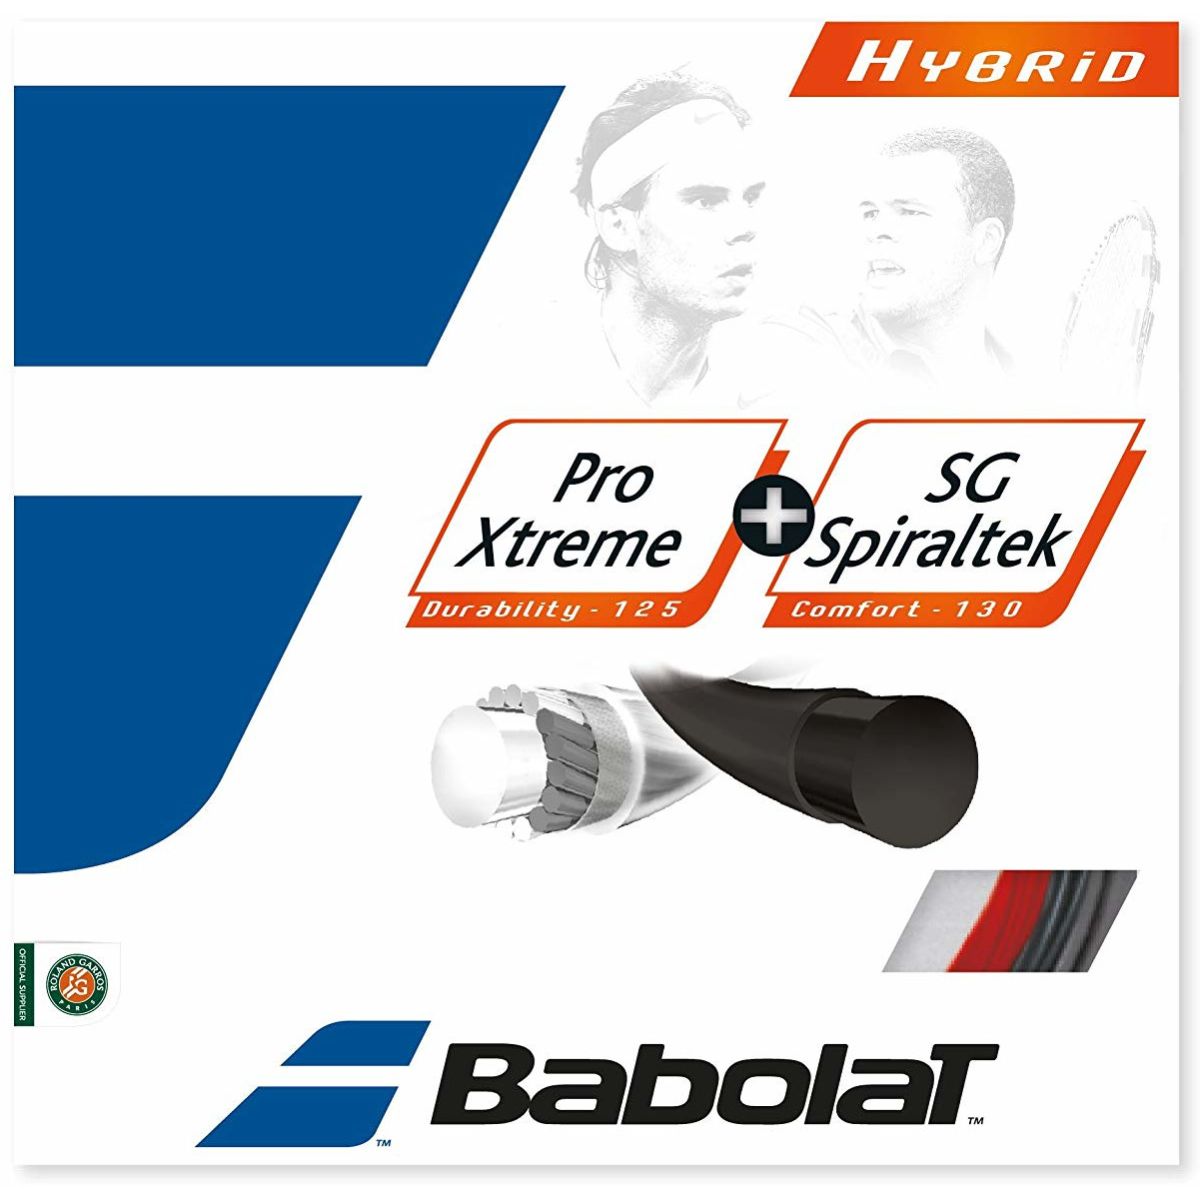 Babolat Hybrid Pro Xtreme & SG Spiraltek Tennis String 2